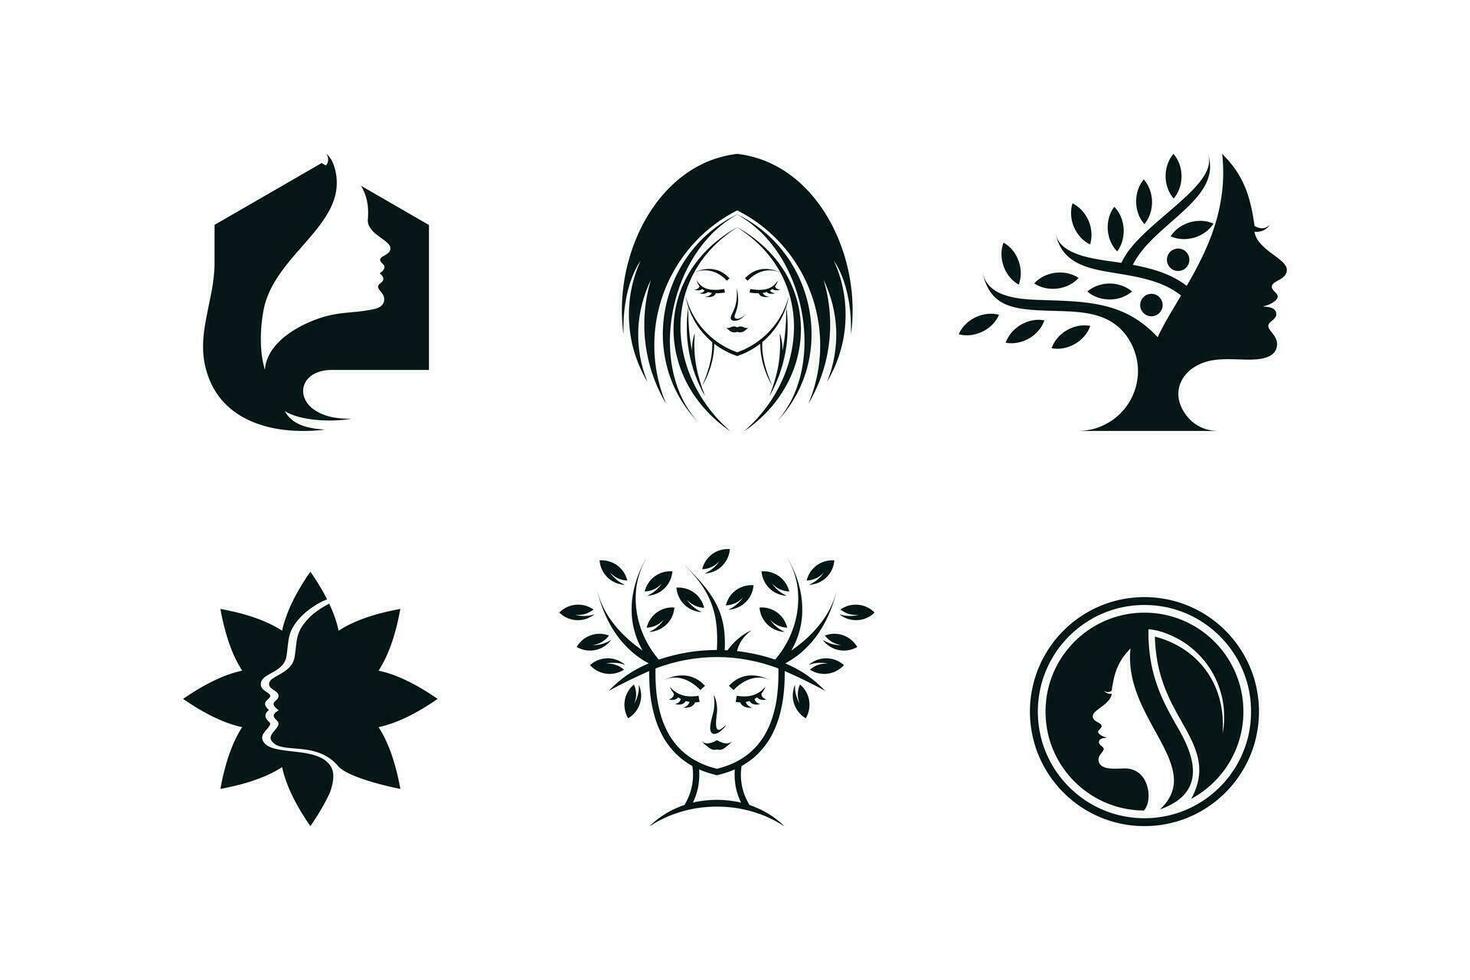 Beauty logo collection with creative unique design vector